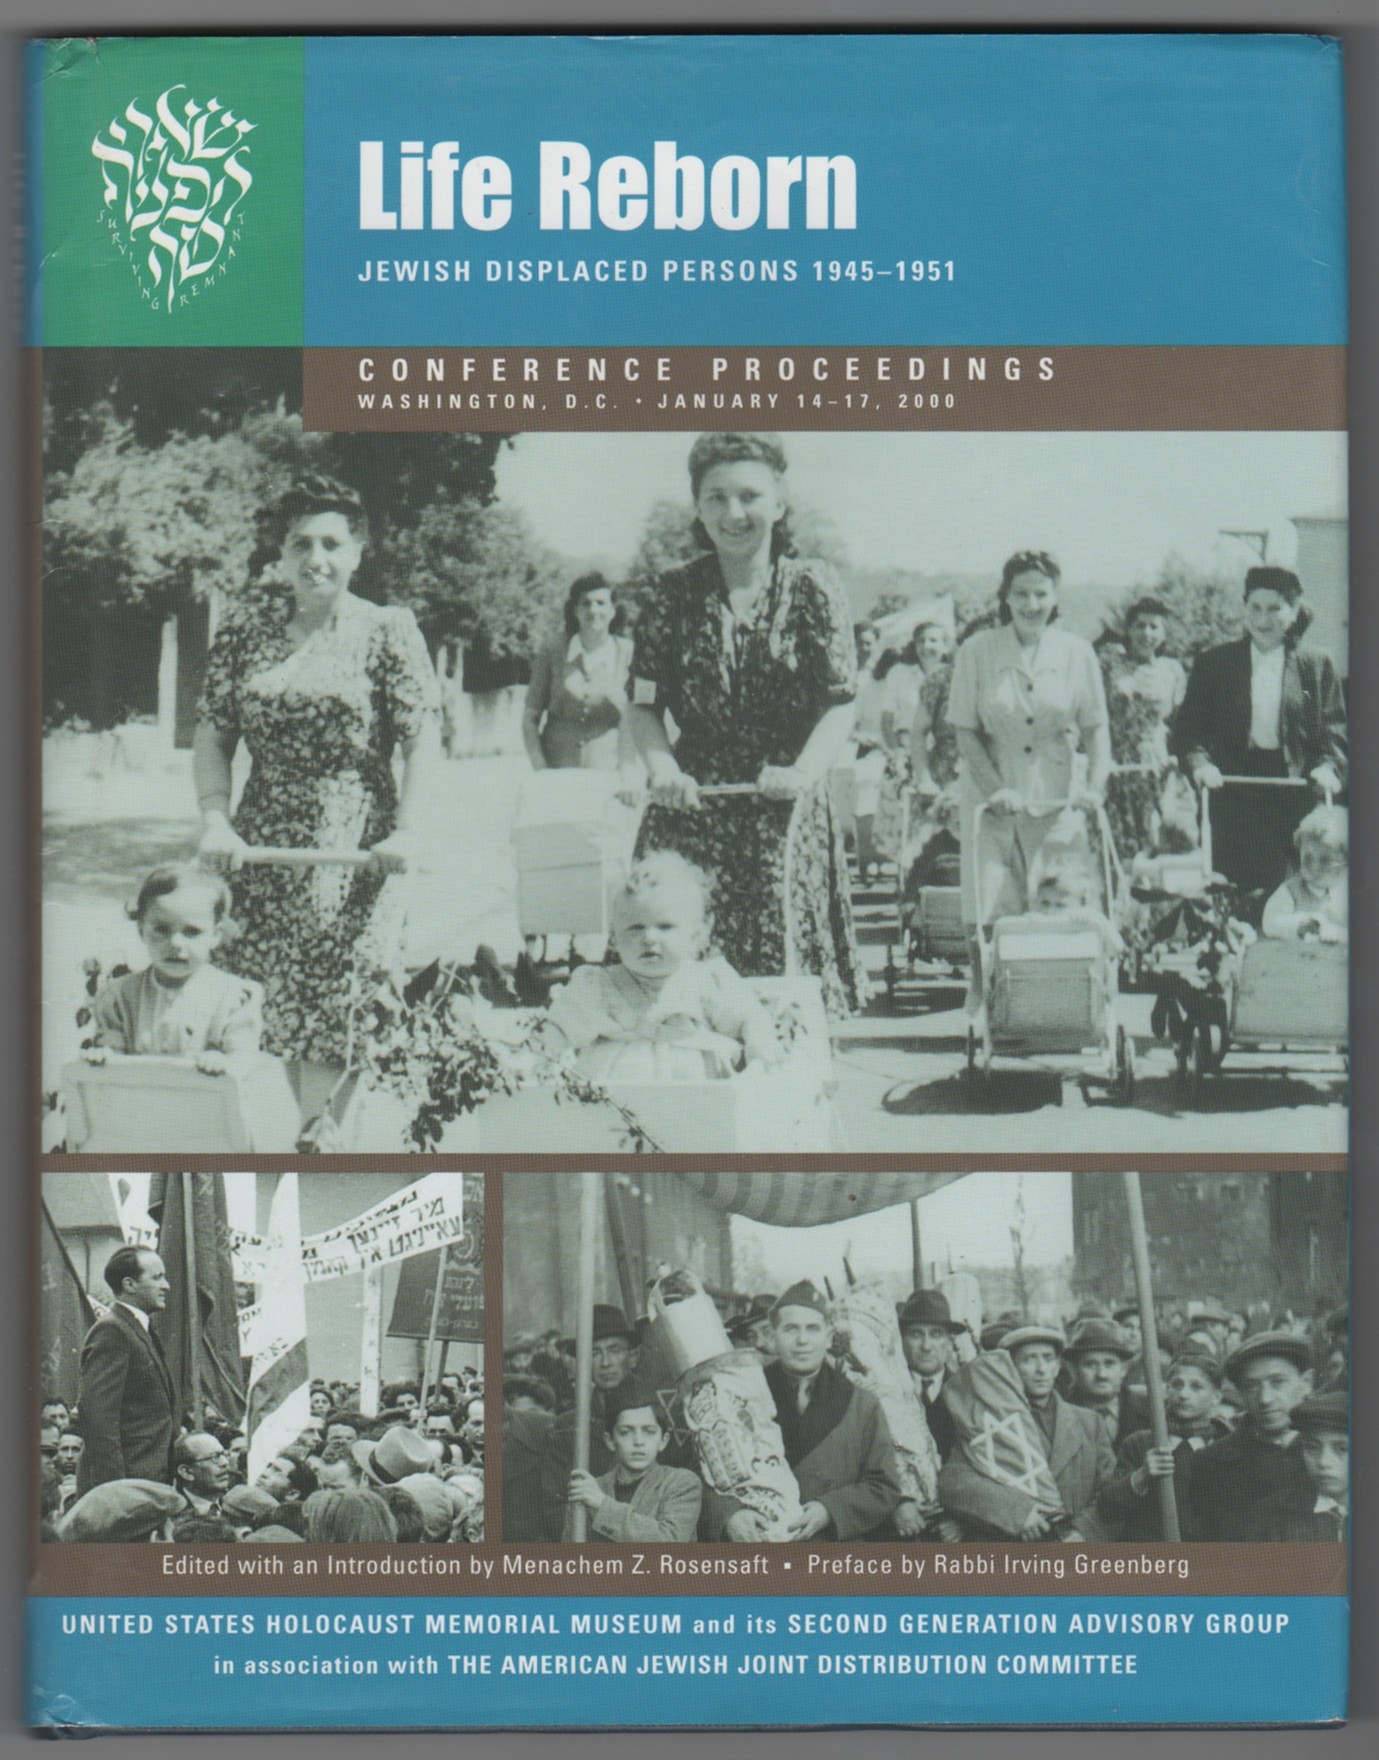 ROSENSAFT, MENACHEM Z. - Life Reborn Jewish Displaced Persons, 1945-1951 : Conference Proceedings, Washington, D.C. January 14